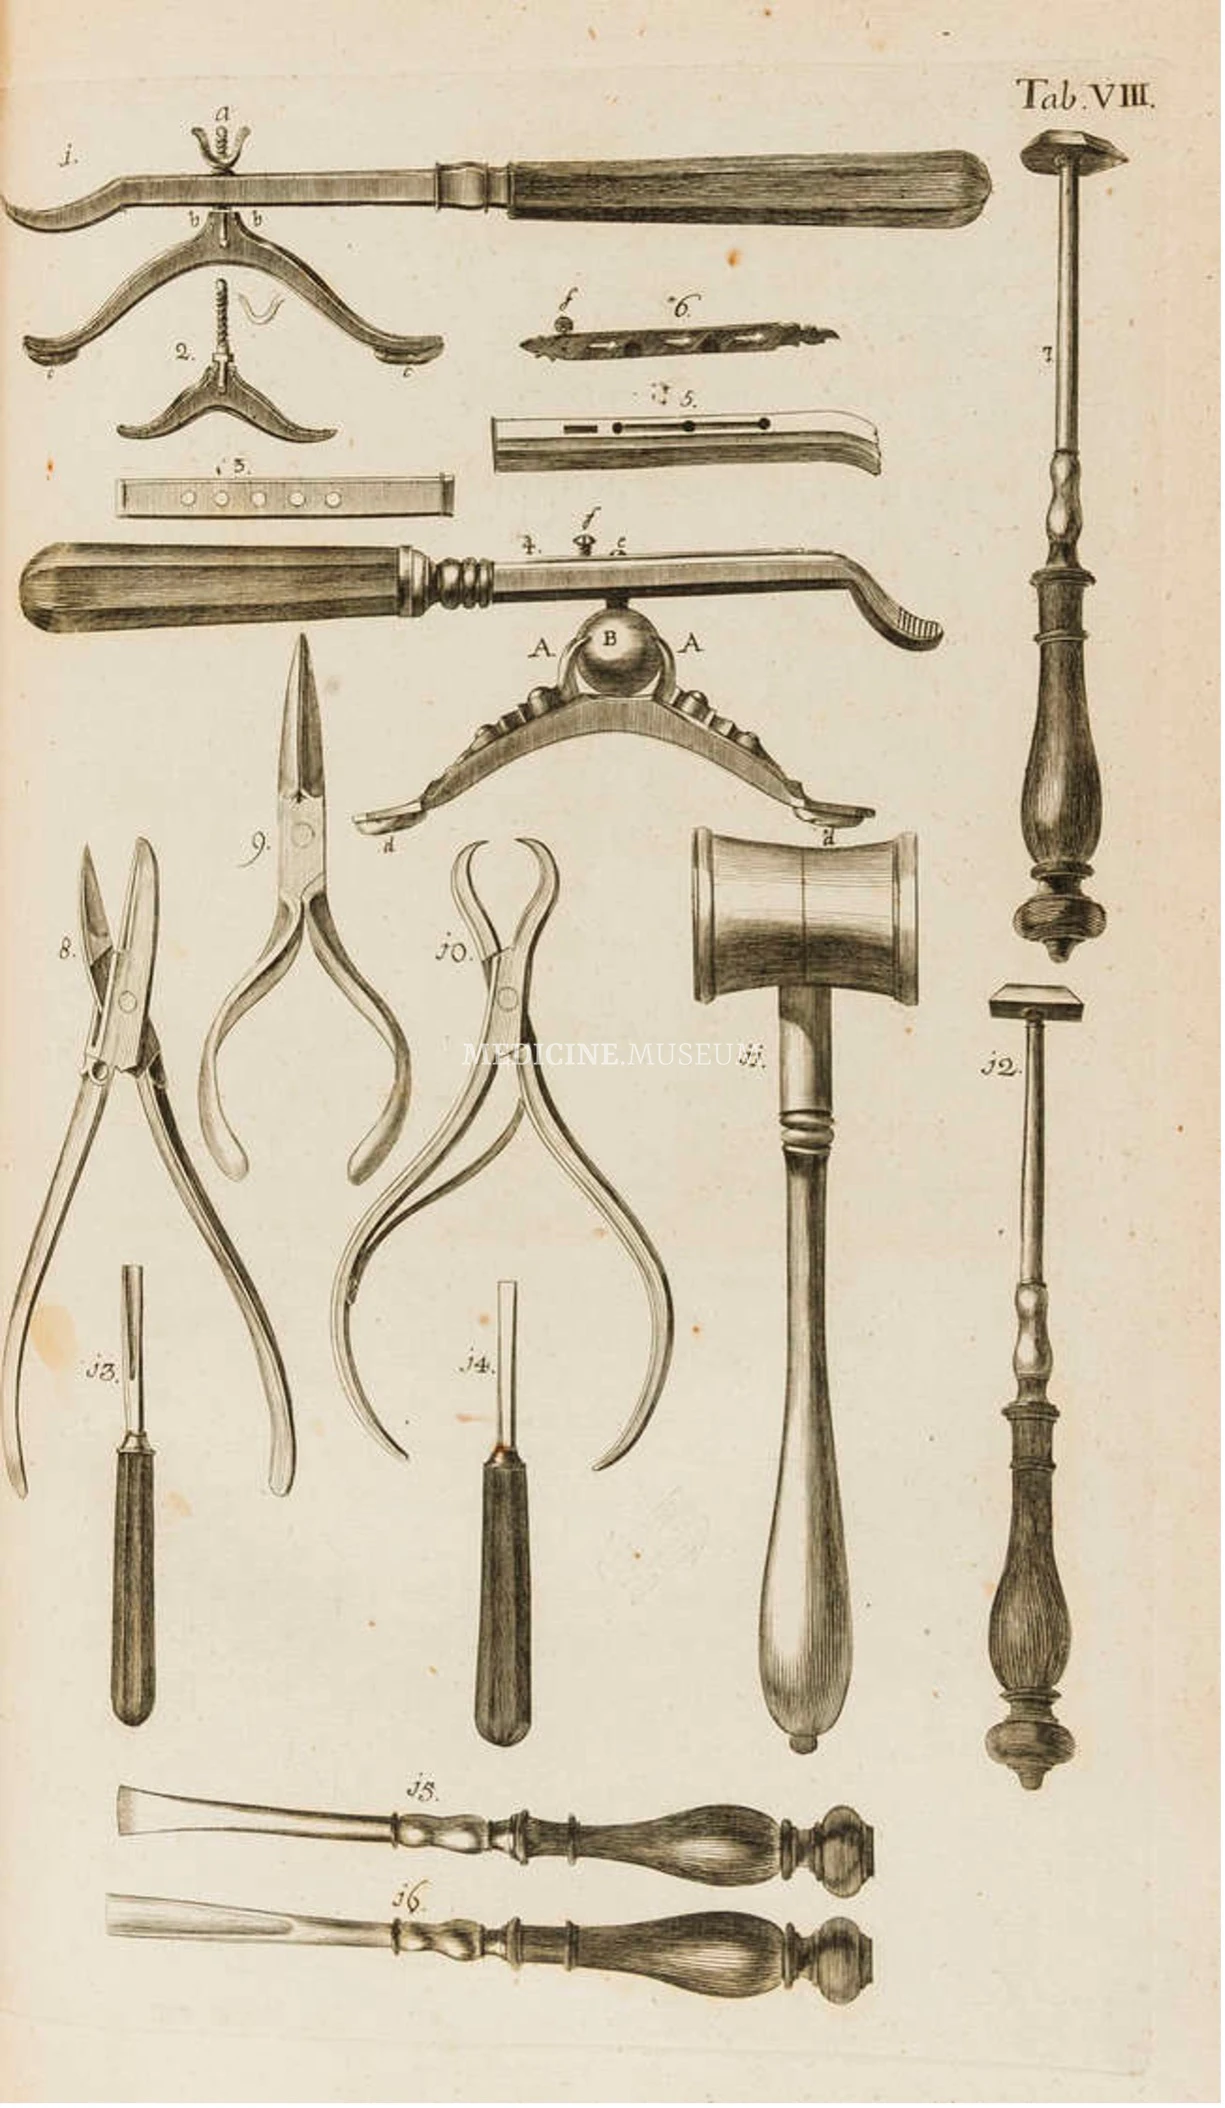 Brambilla, Giovanni Alessandro. Instrumentarium chirurgicum militare Austriacum, Vienna, 1782.